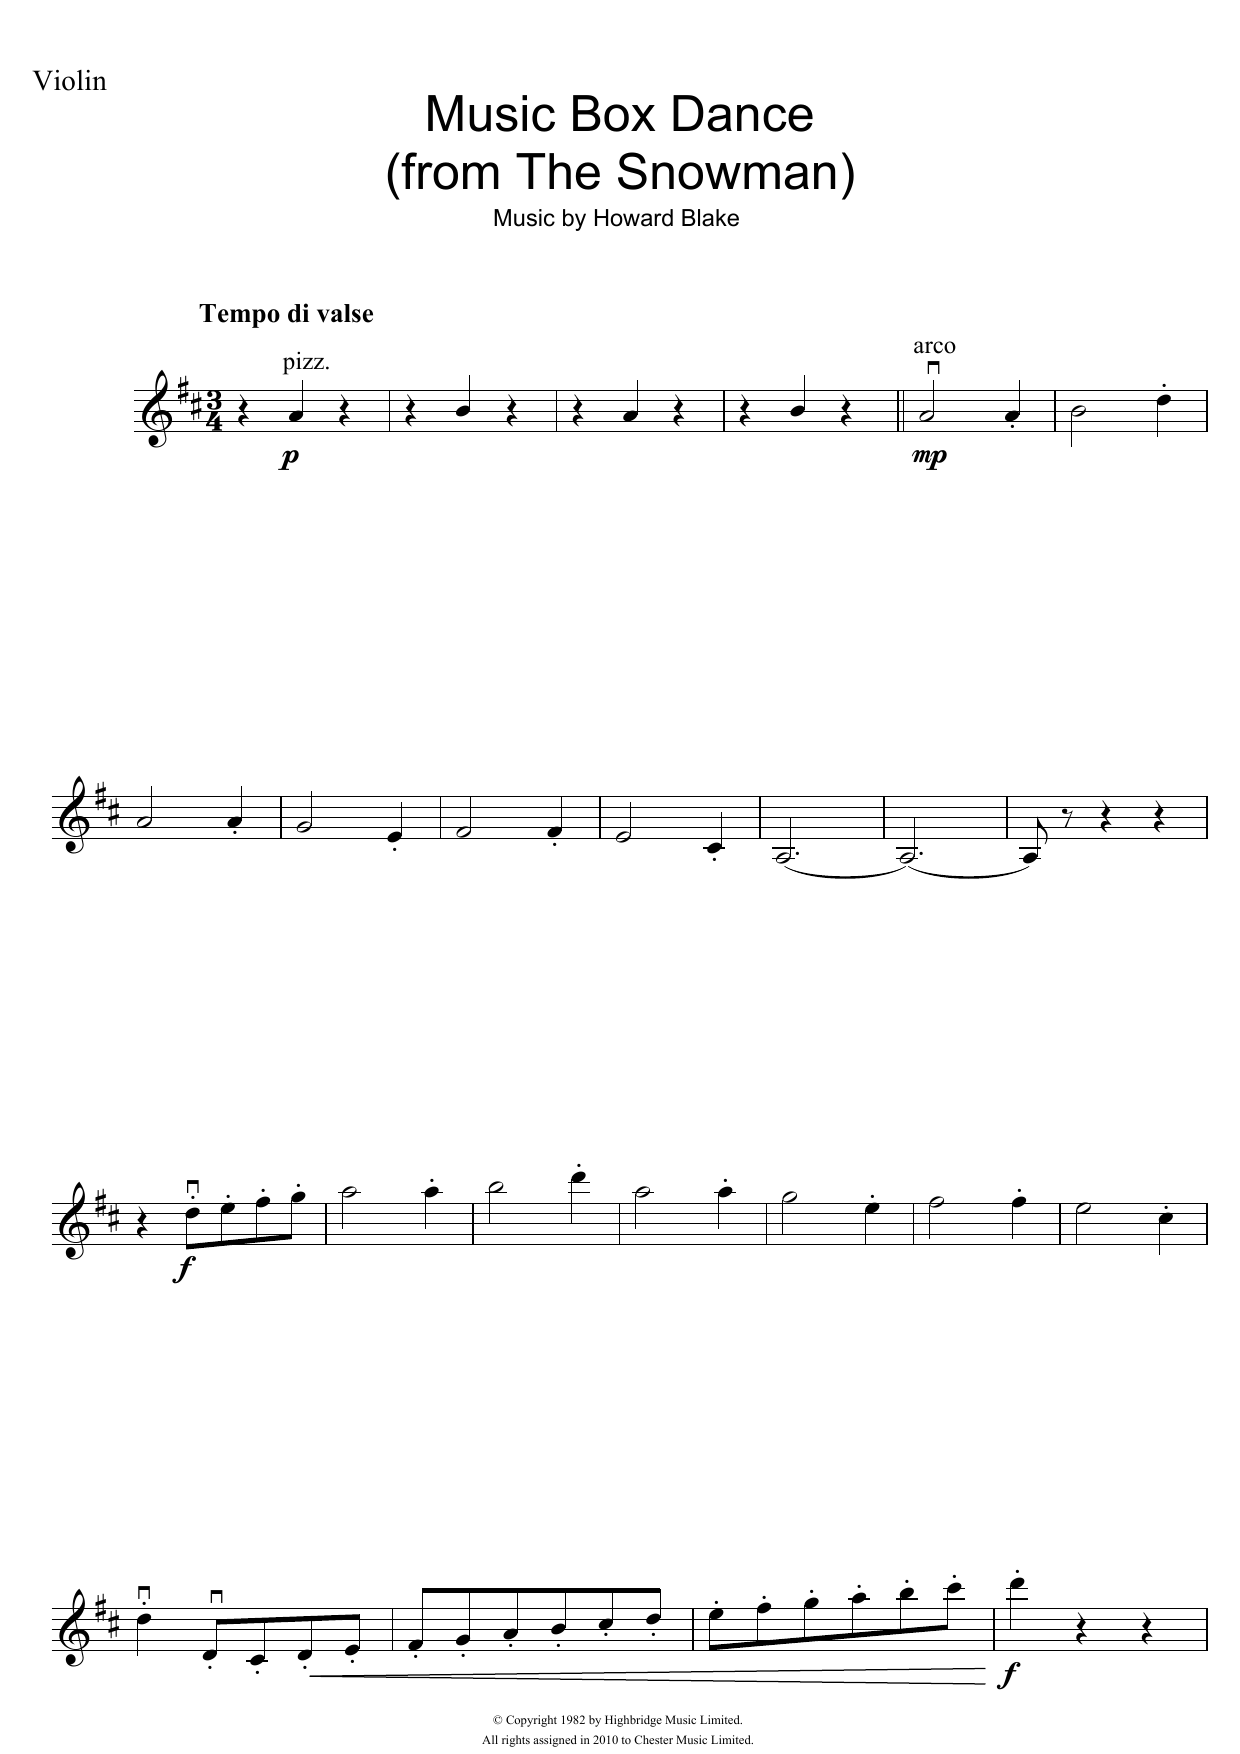 Howard Blake Music Box Dance Sheet Music Notes & Chords for Piano, Vocal & Guitar - Download or Print PDF